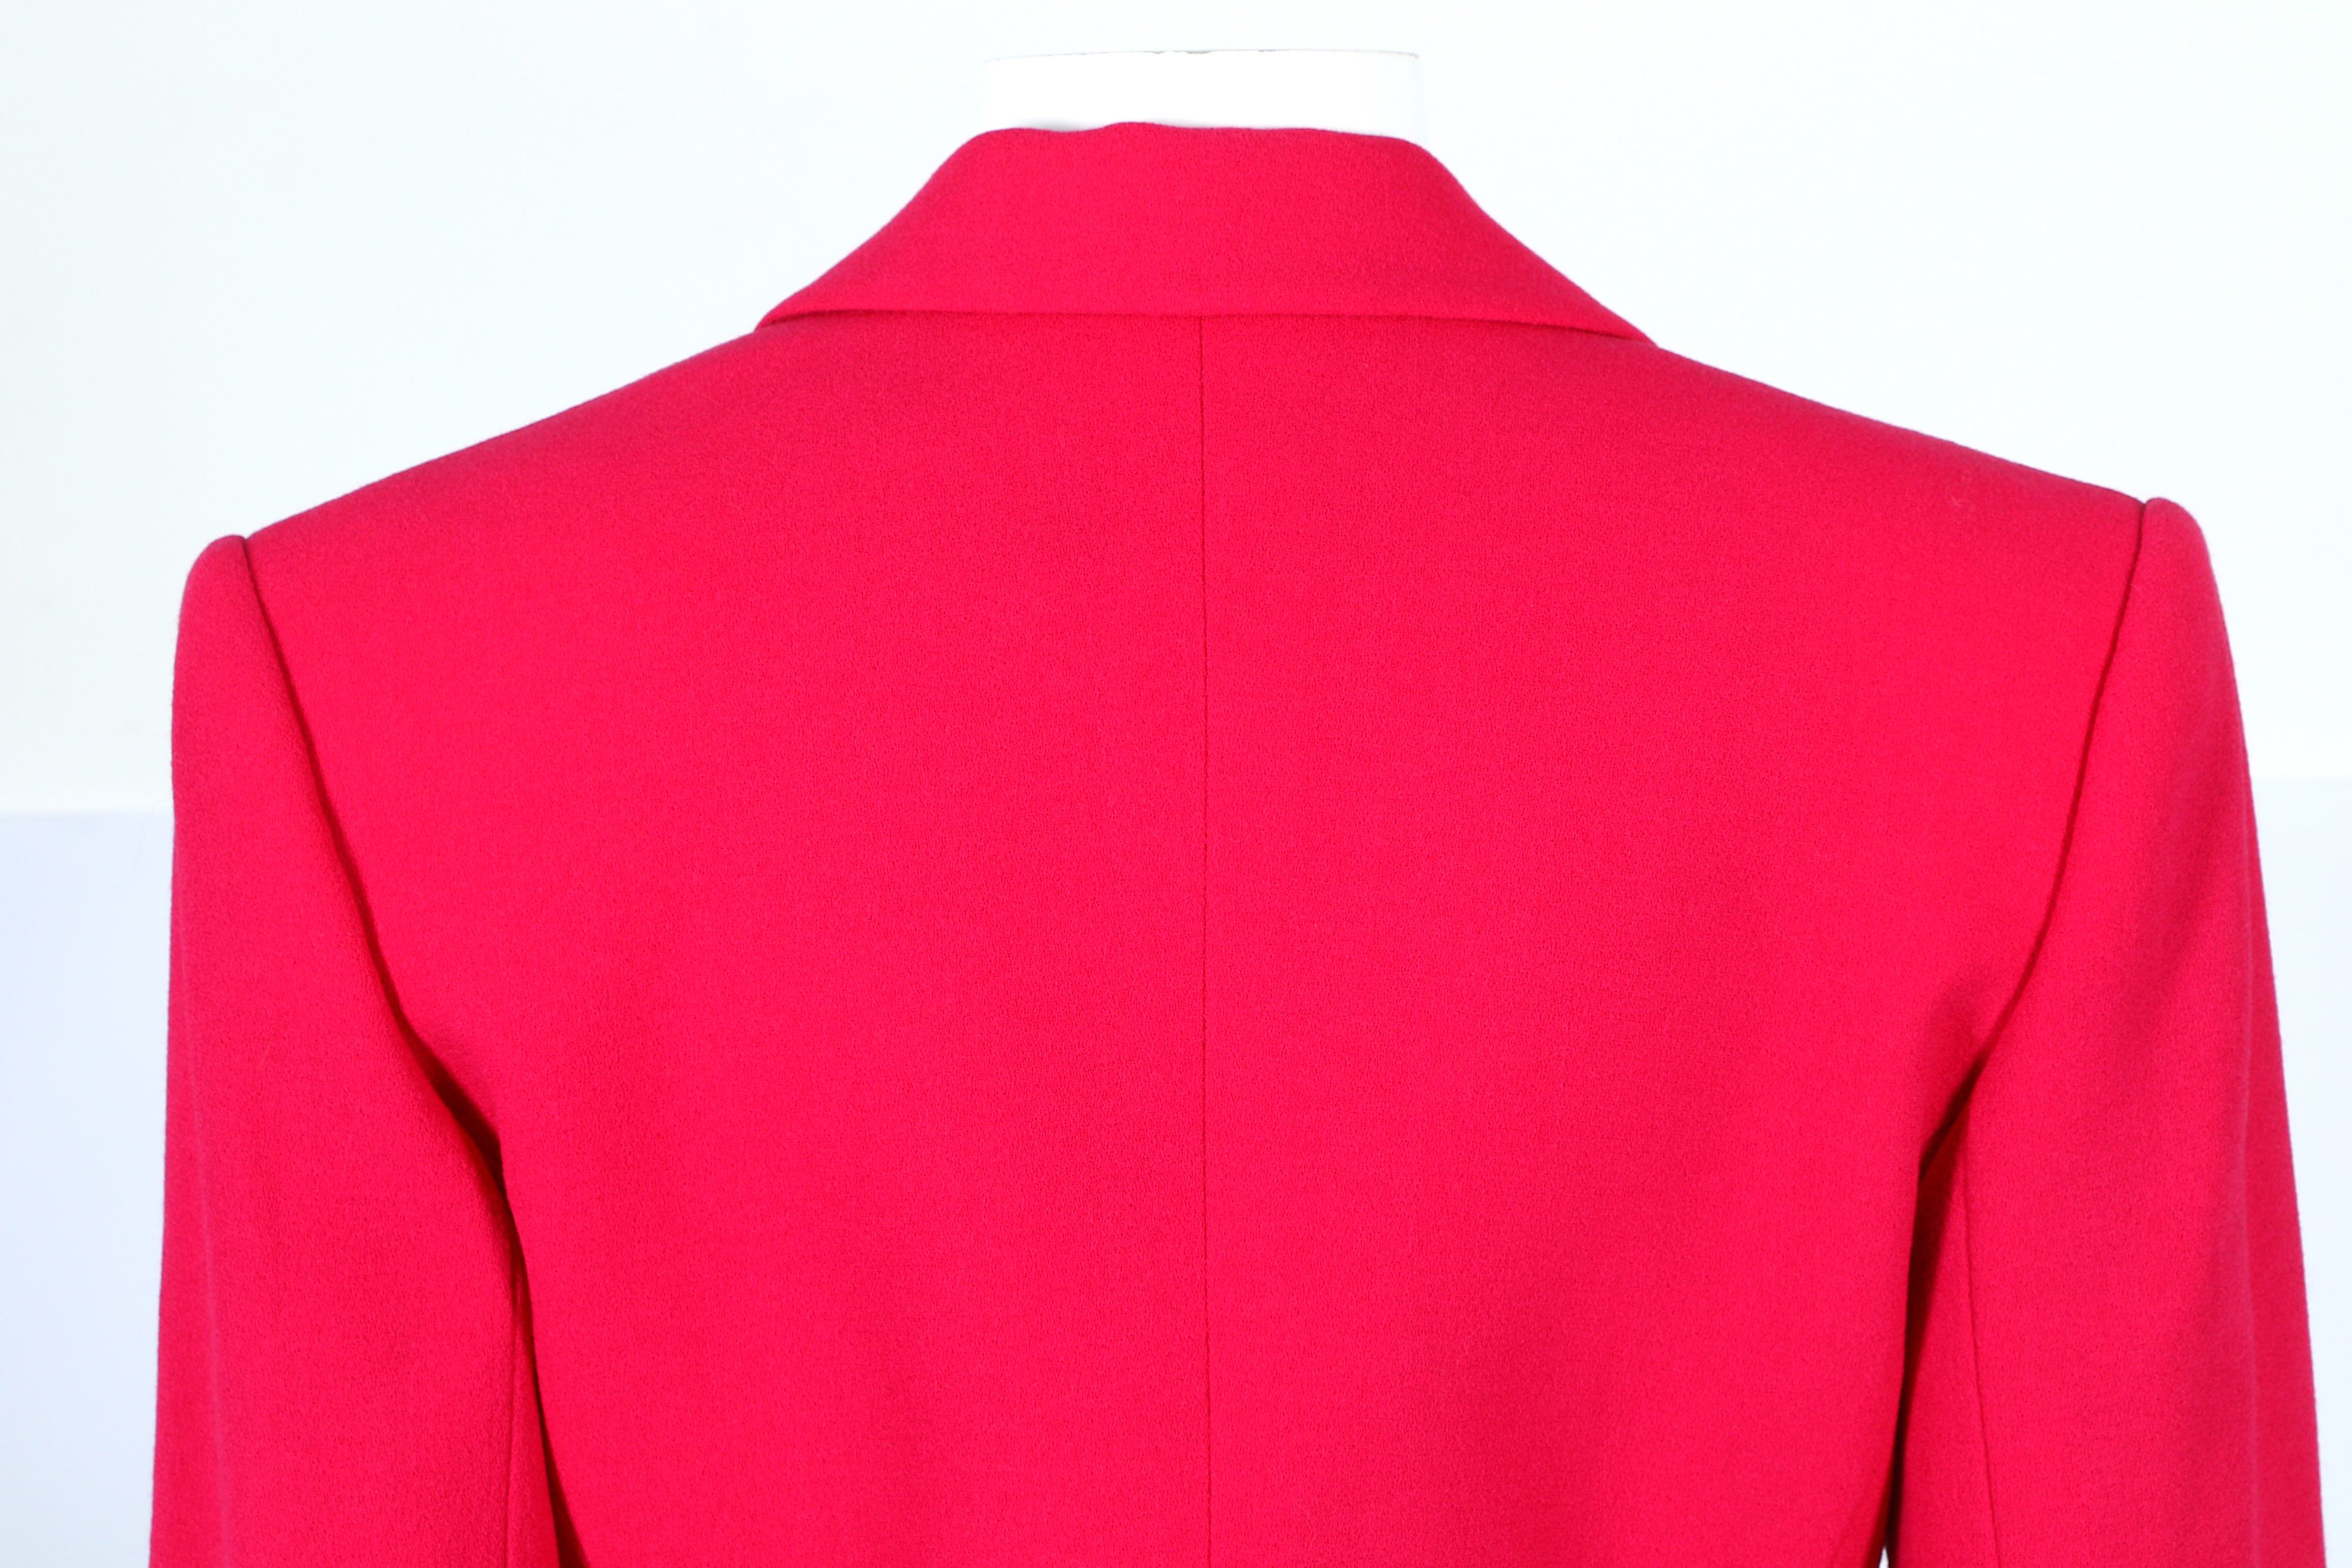 Christian Dior Boutique Demi-Couture Fuschia Skirt Suit - Image 5 of 6